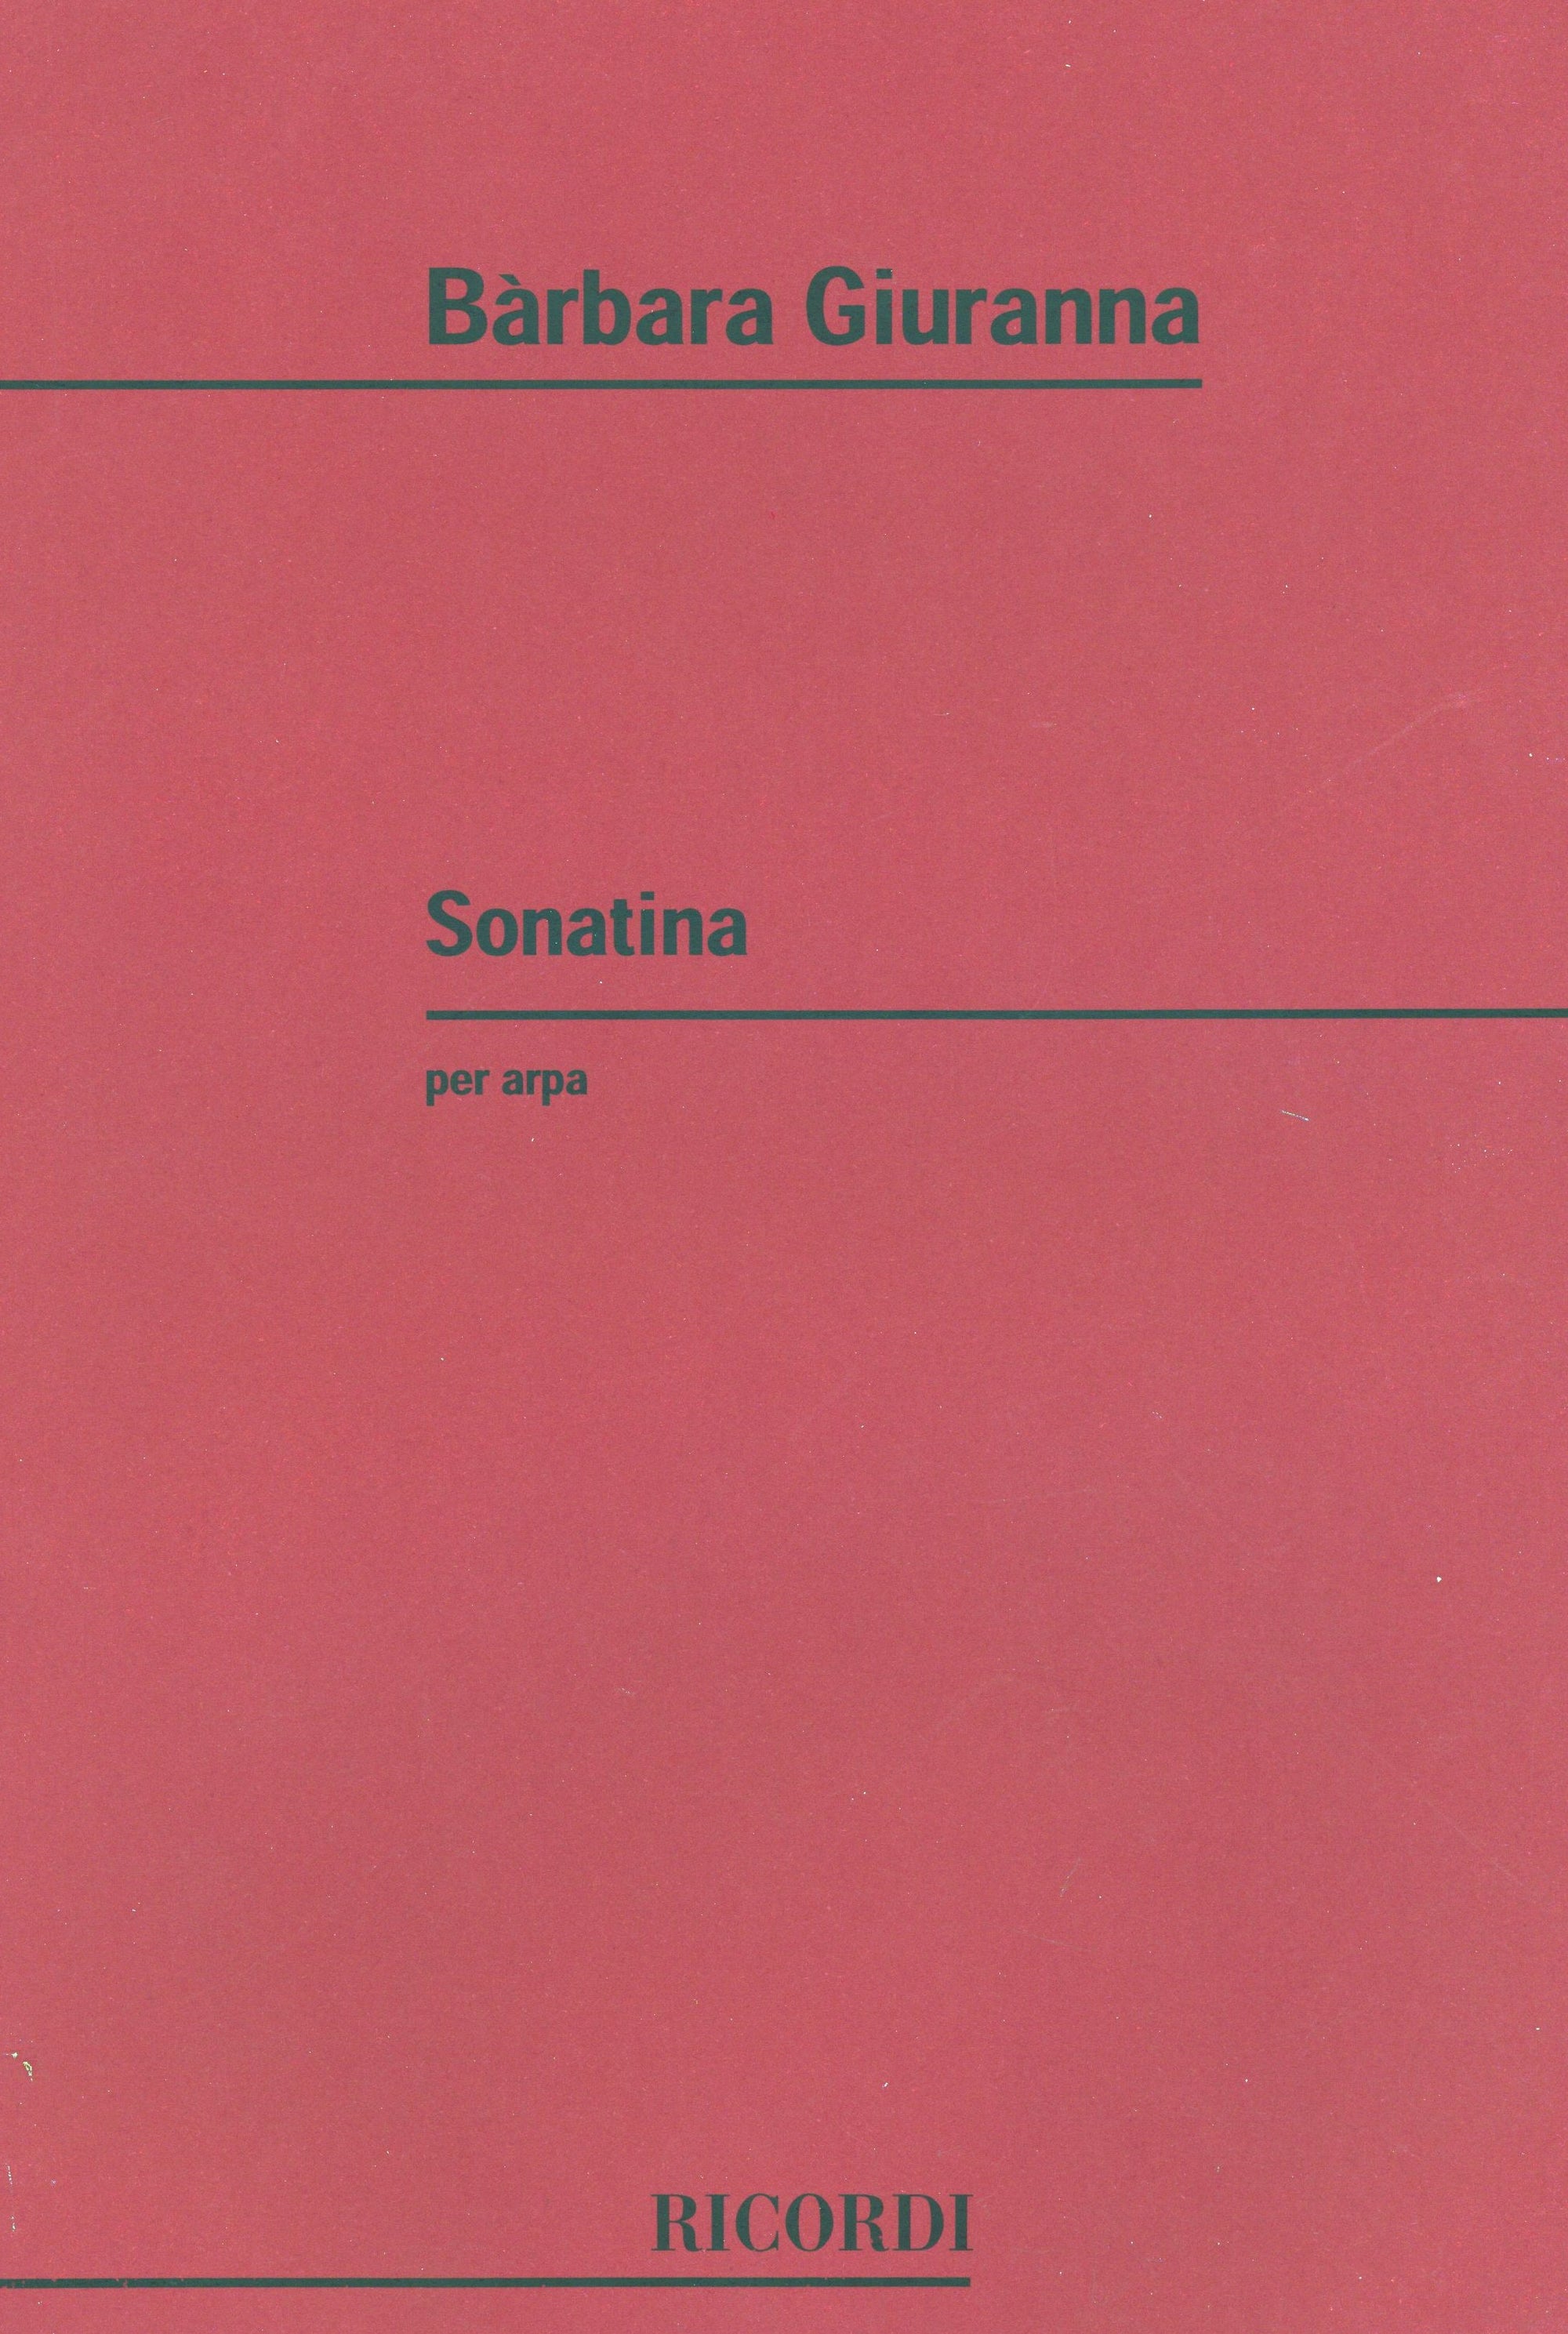 Giuranna: Sonatina for Harp